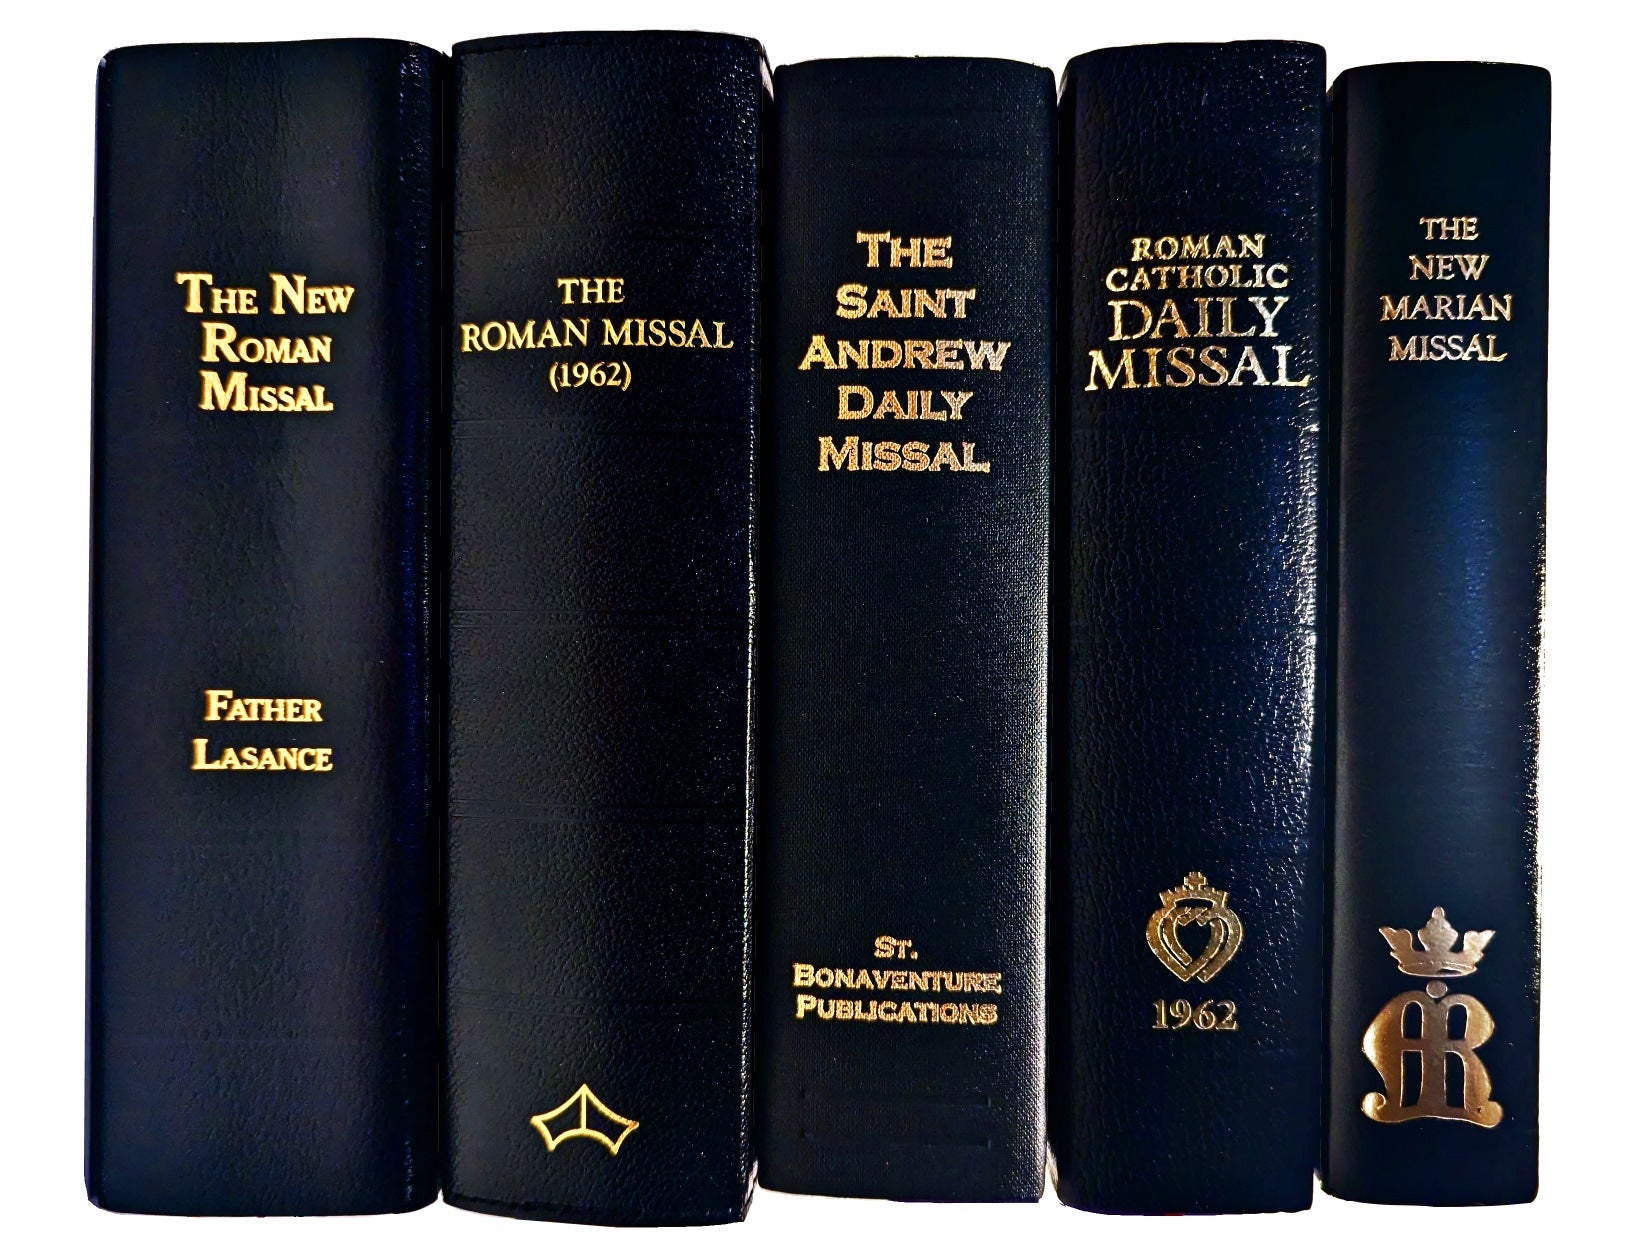 Latin Mass Daily Missal